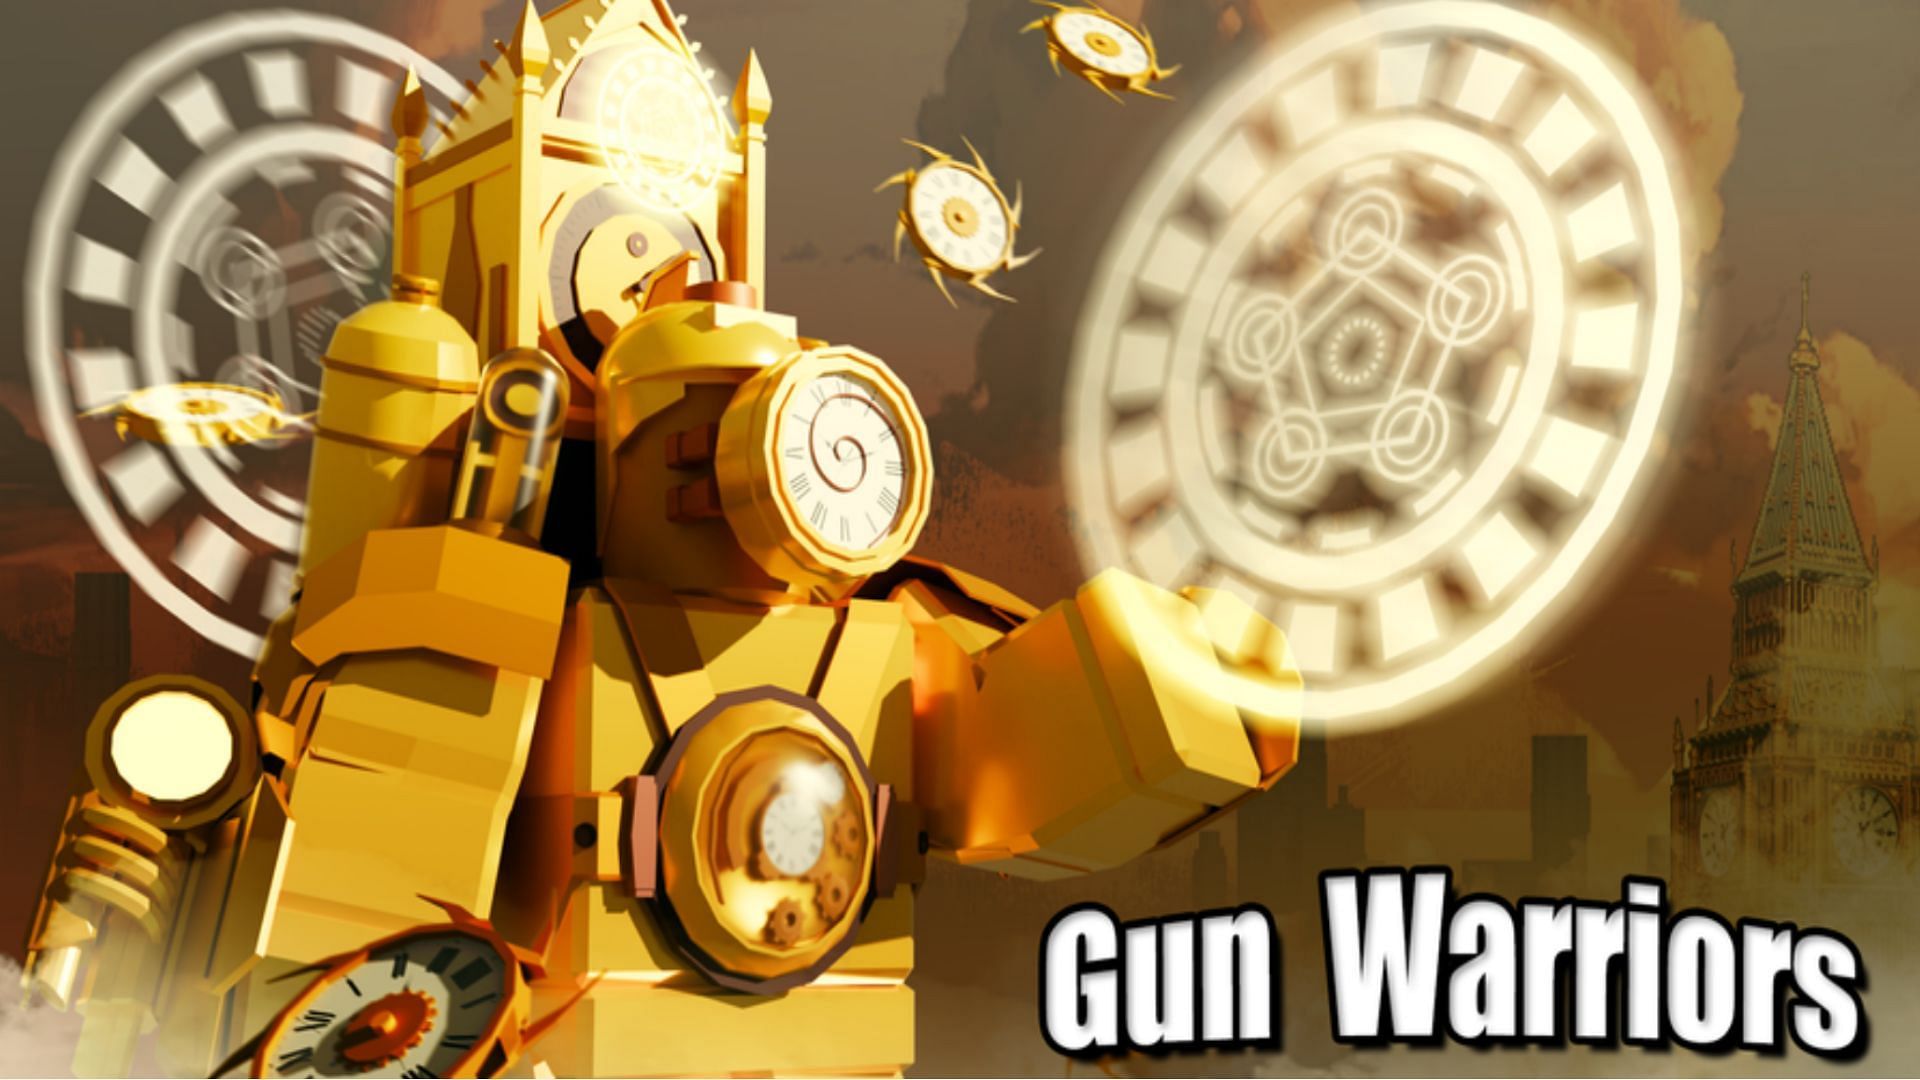 Gun Warriors Codes